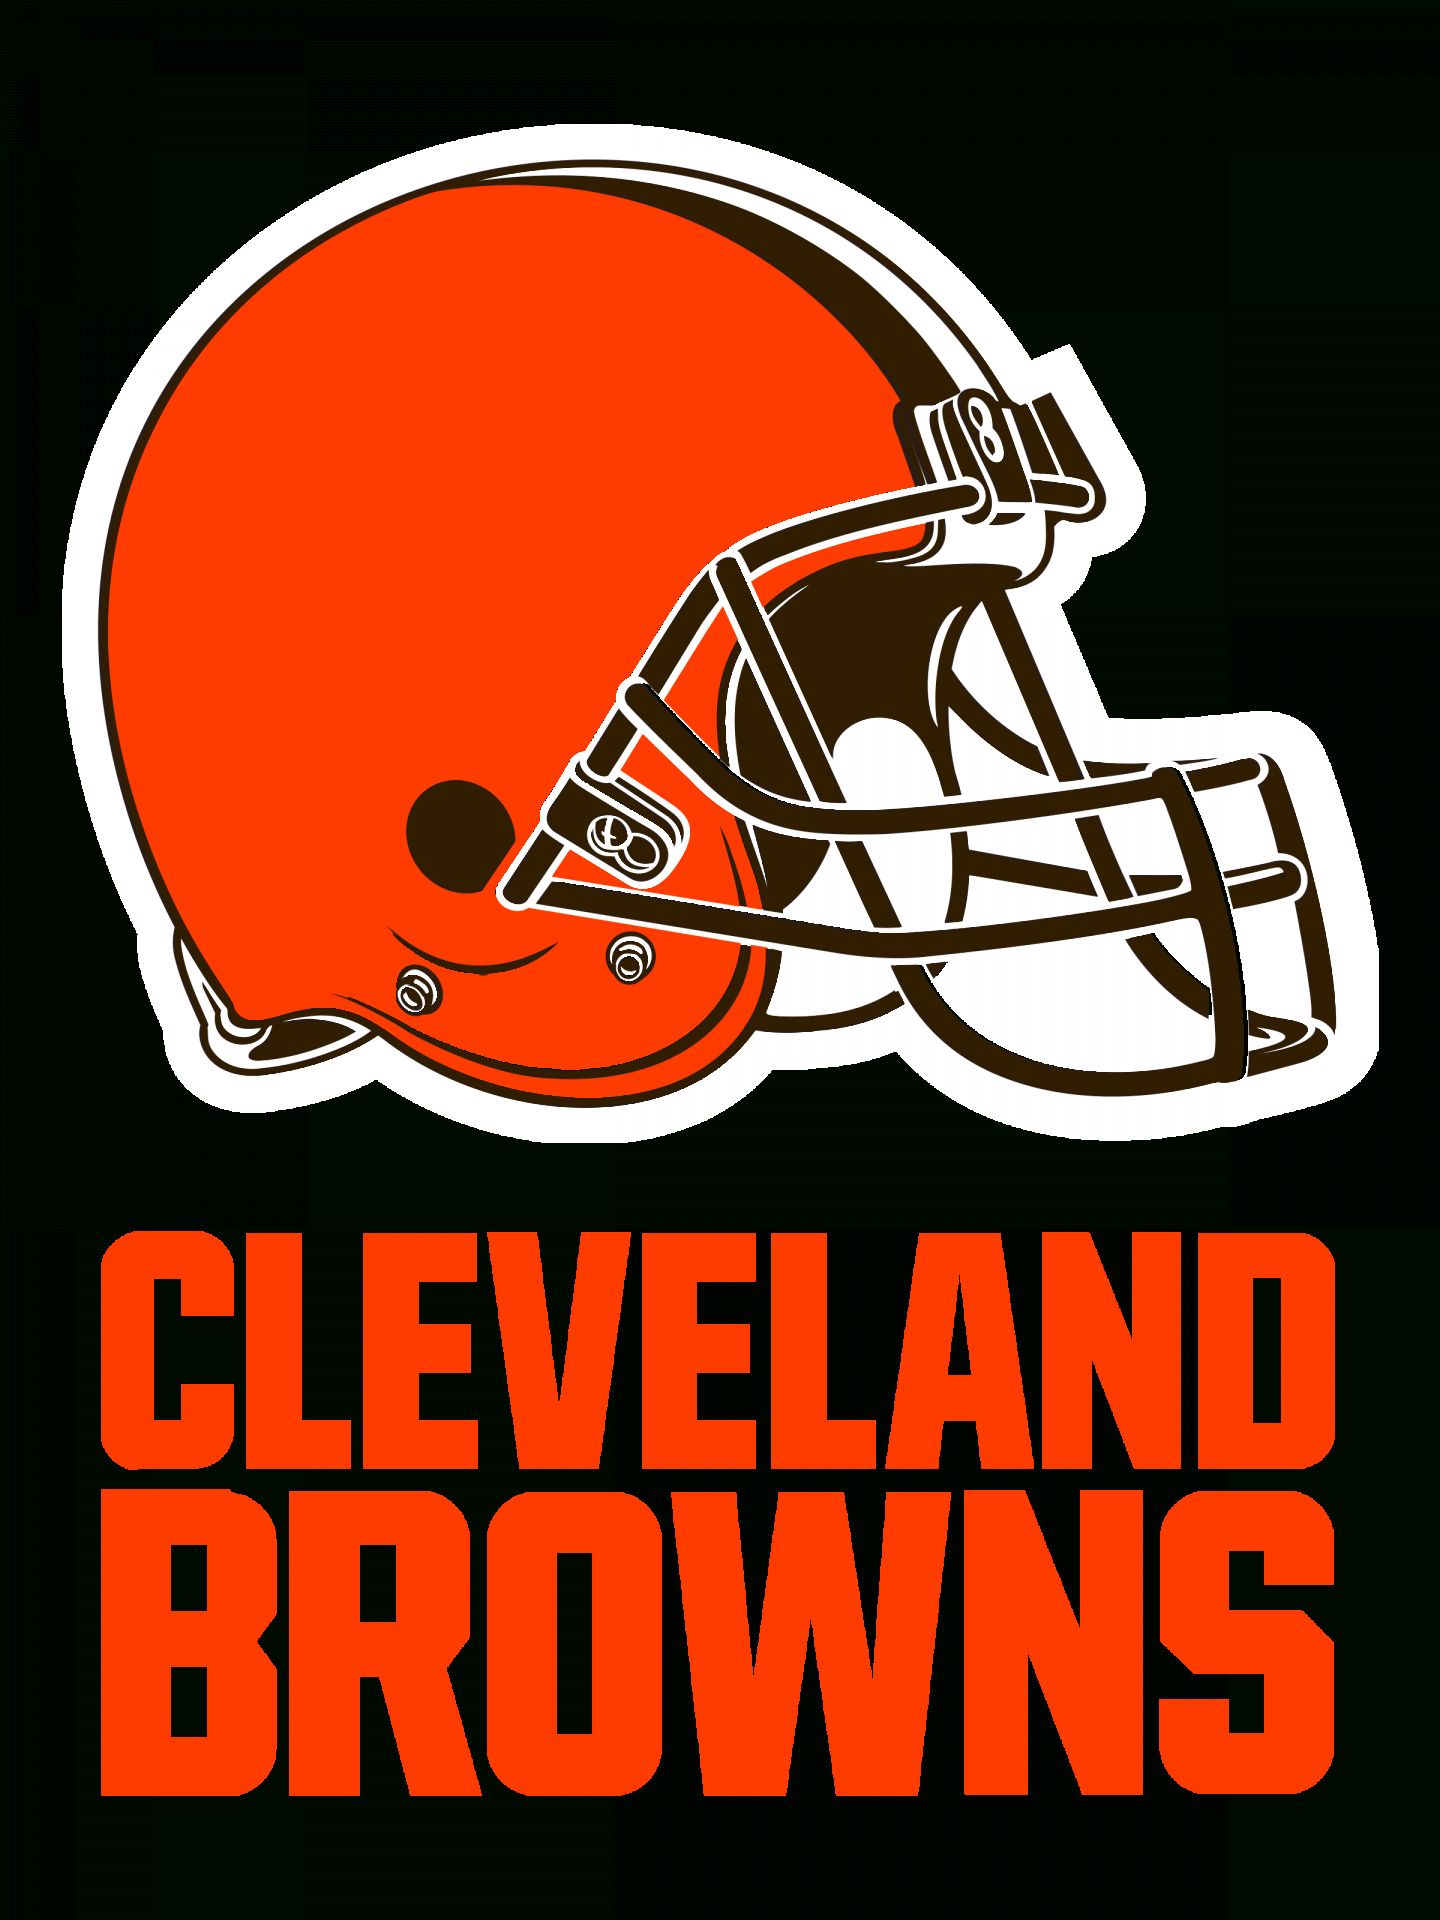 Cleveland Browns Logo Png. Cleveland browns wallpaper, Cleveland browns logo, Cleveland browns